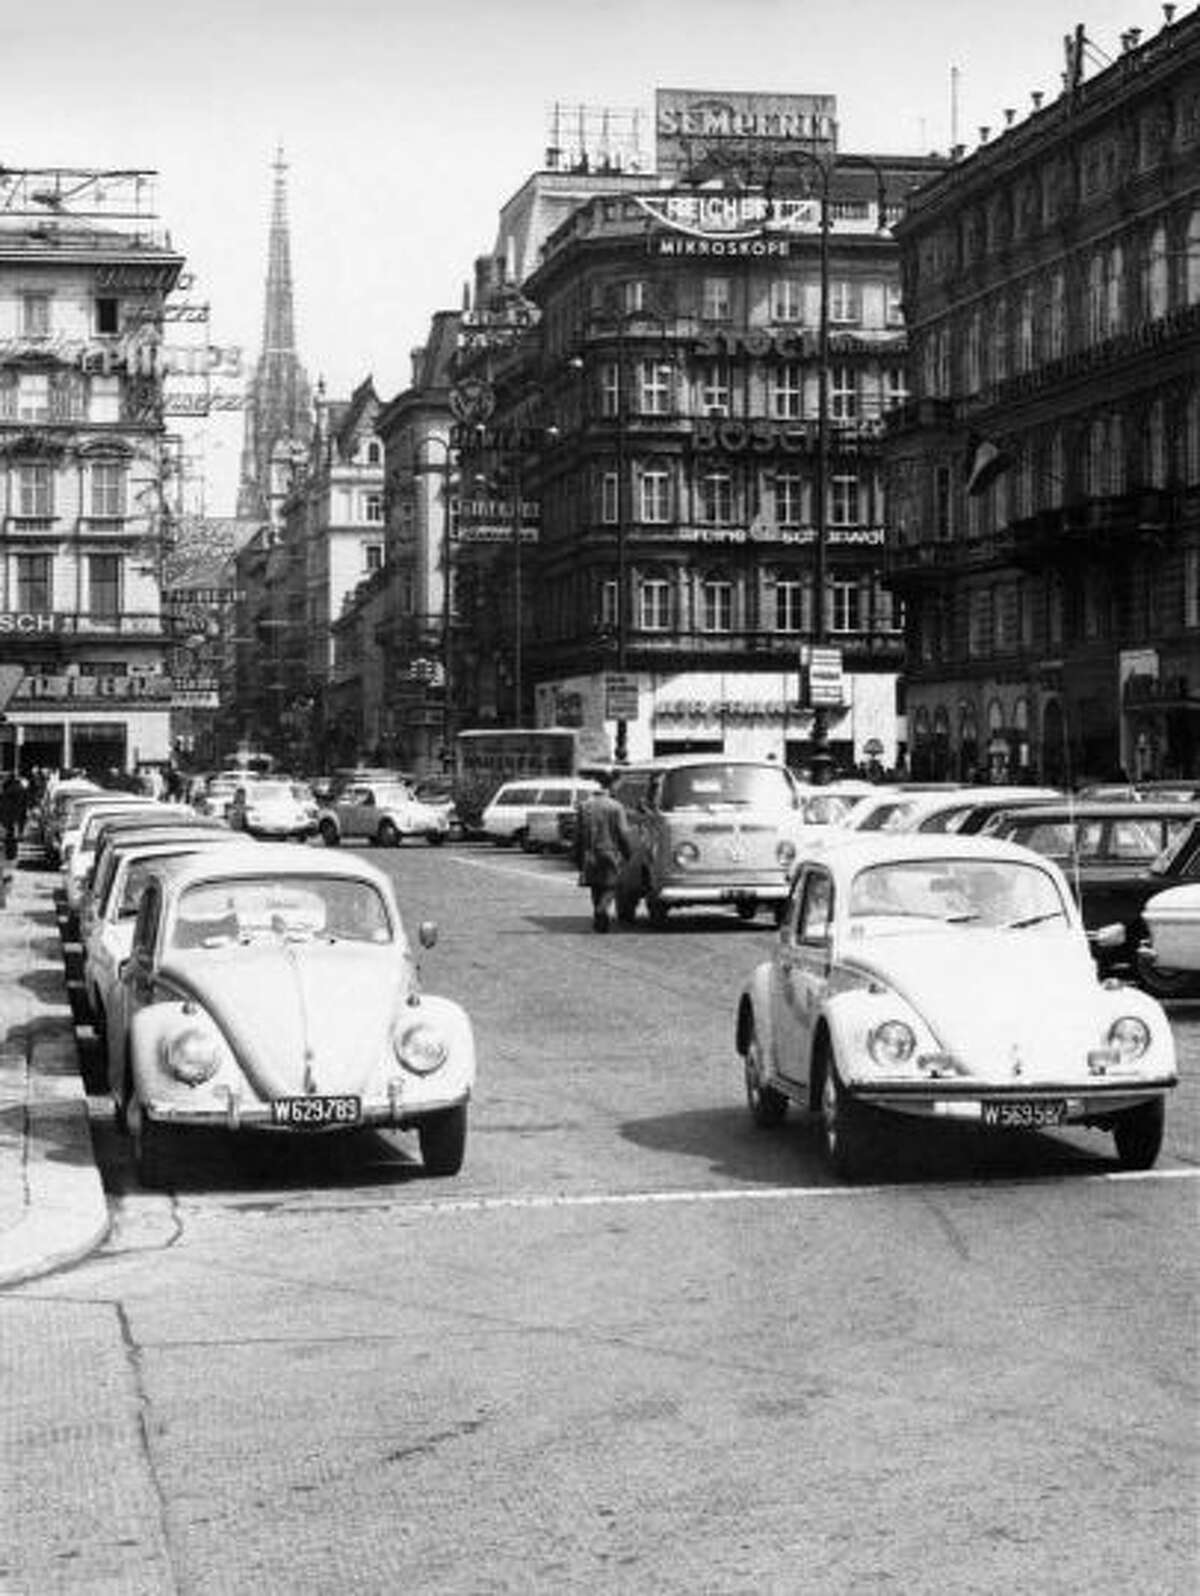 A Volkswagen Type 2 van putters along in the background behind Volkswagen Type 1 cars (aka Beetles) in Vienna, Austria, 1965.